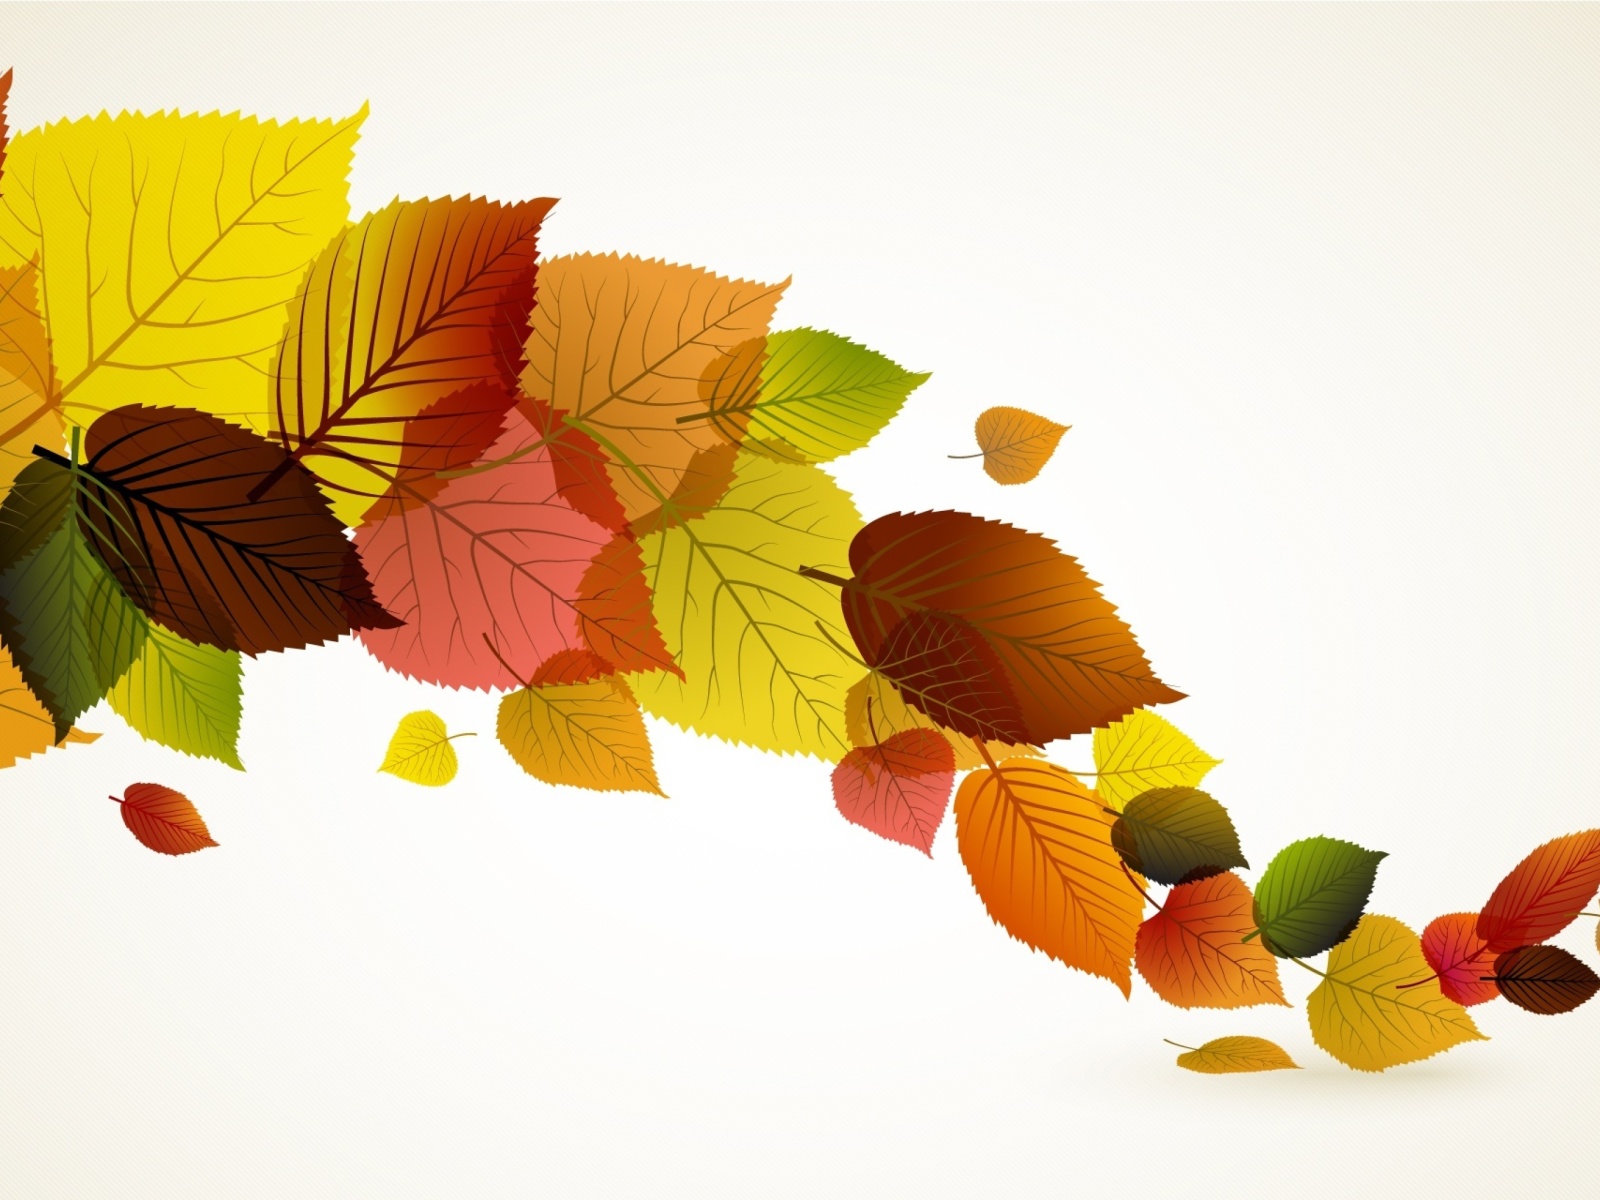 Drawn autumn leaves wallpaper 1600x1200